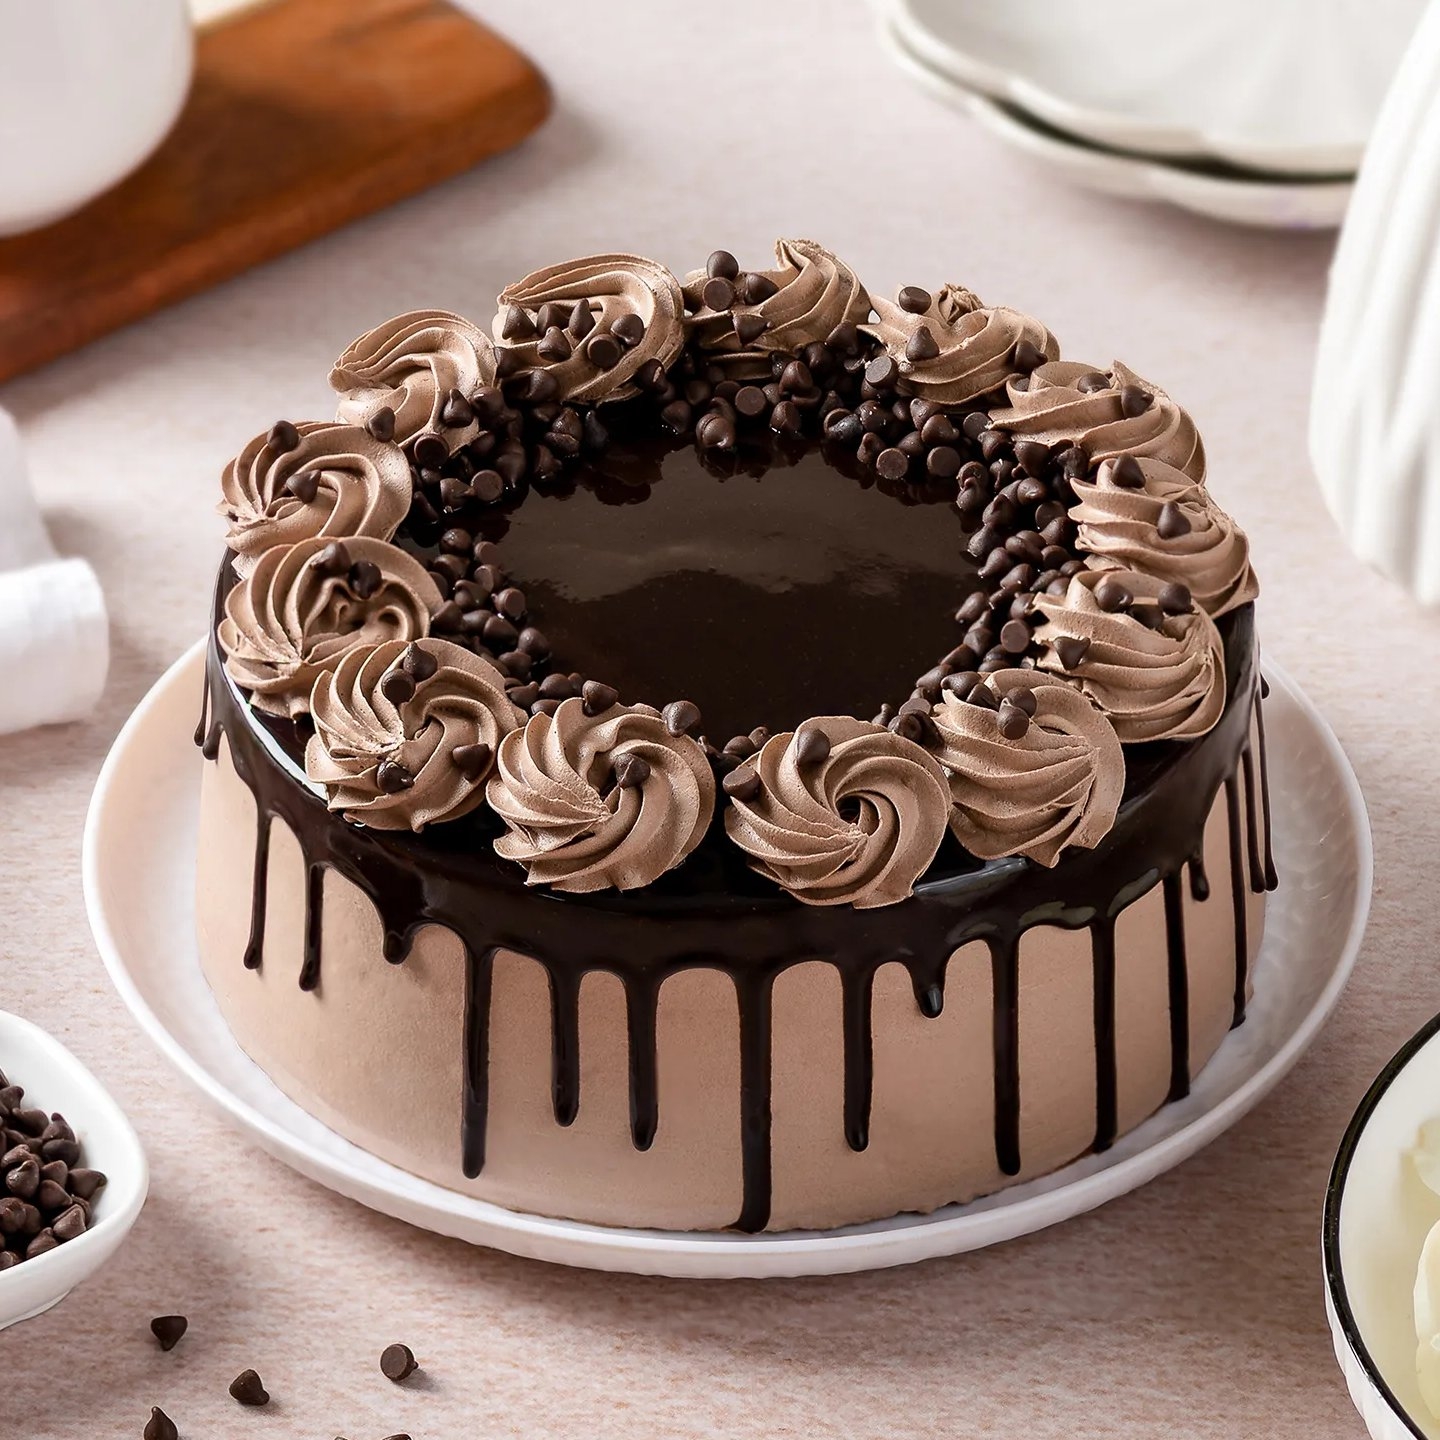 Send 500Gm Eggless Chocolate Cake to India | ExpressGiftService